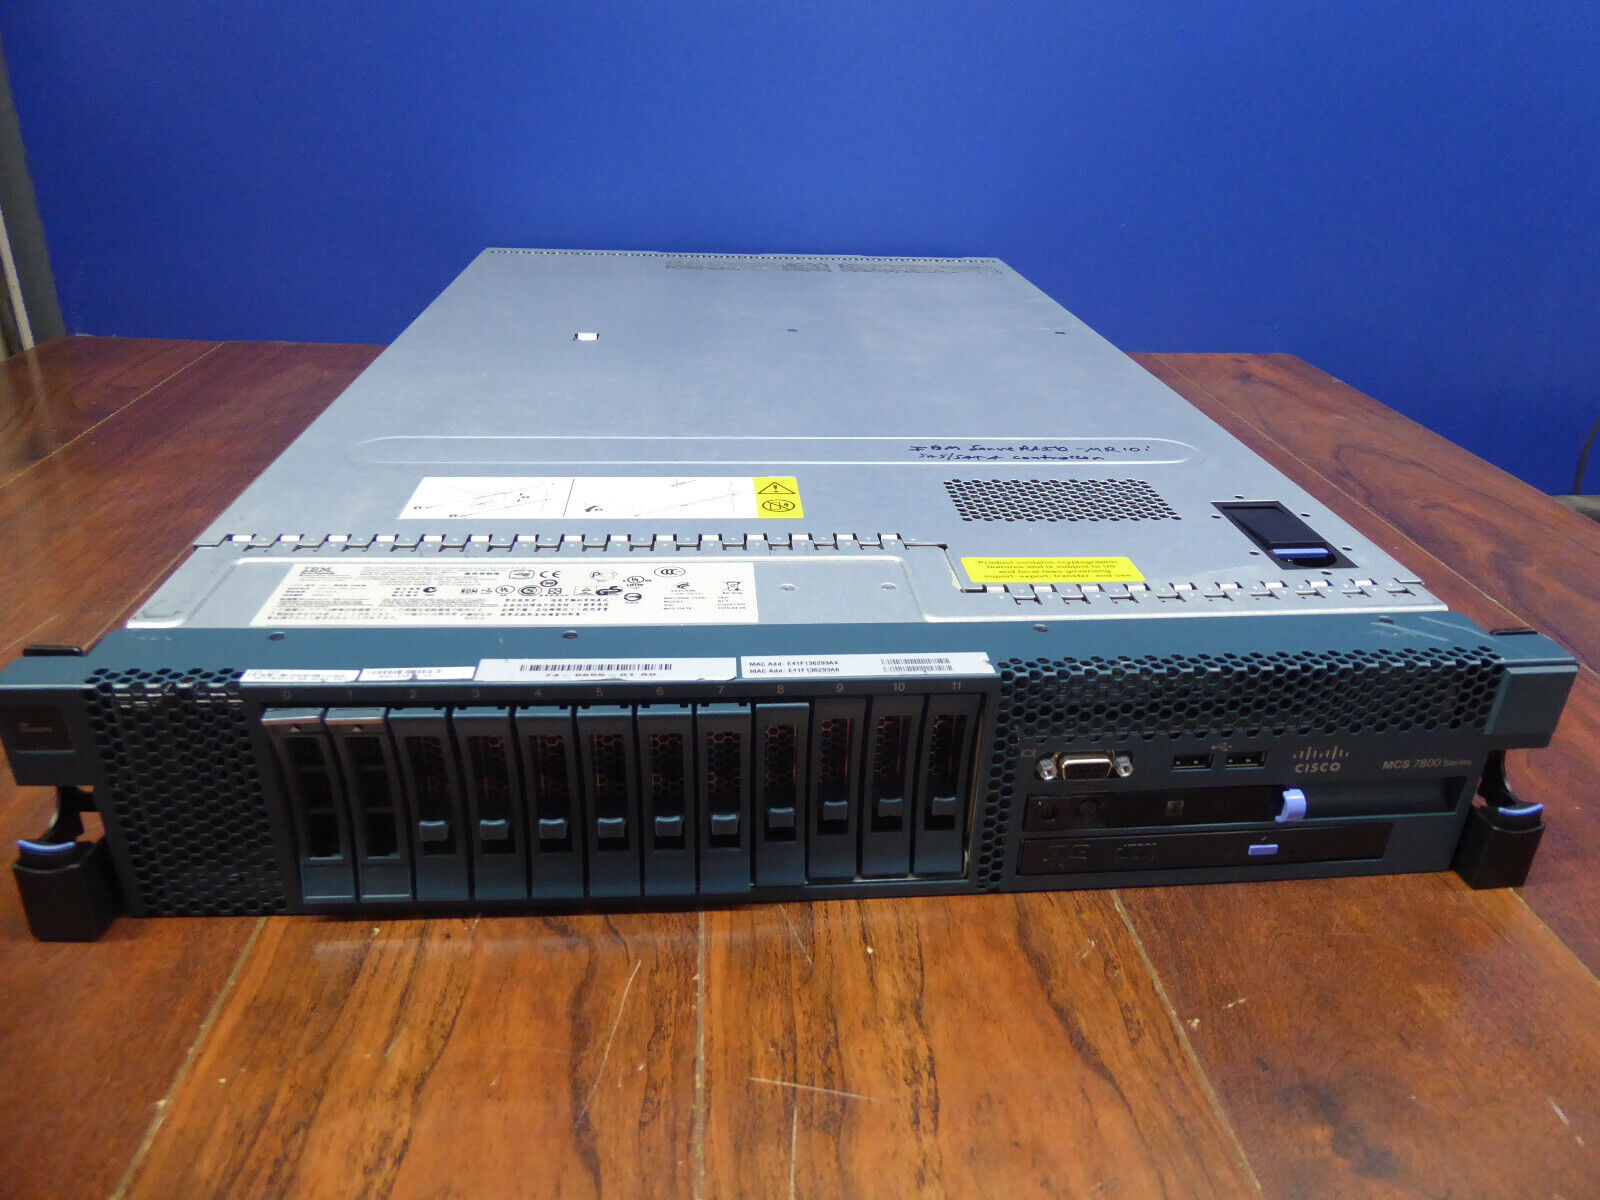      IBM x3650 CISCO MCS 7800 2U SERVER XEON 2.0GHz 4GB 2x 300GB RAID 1 7947-PAR